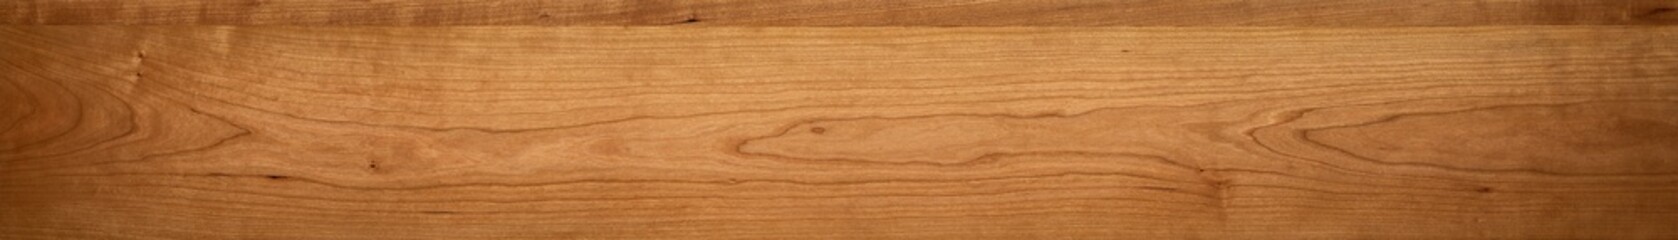 Wide textured background. Wide format cherry wood plank texture background. Wooden planks texture...